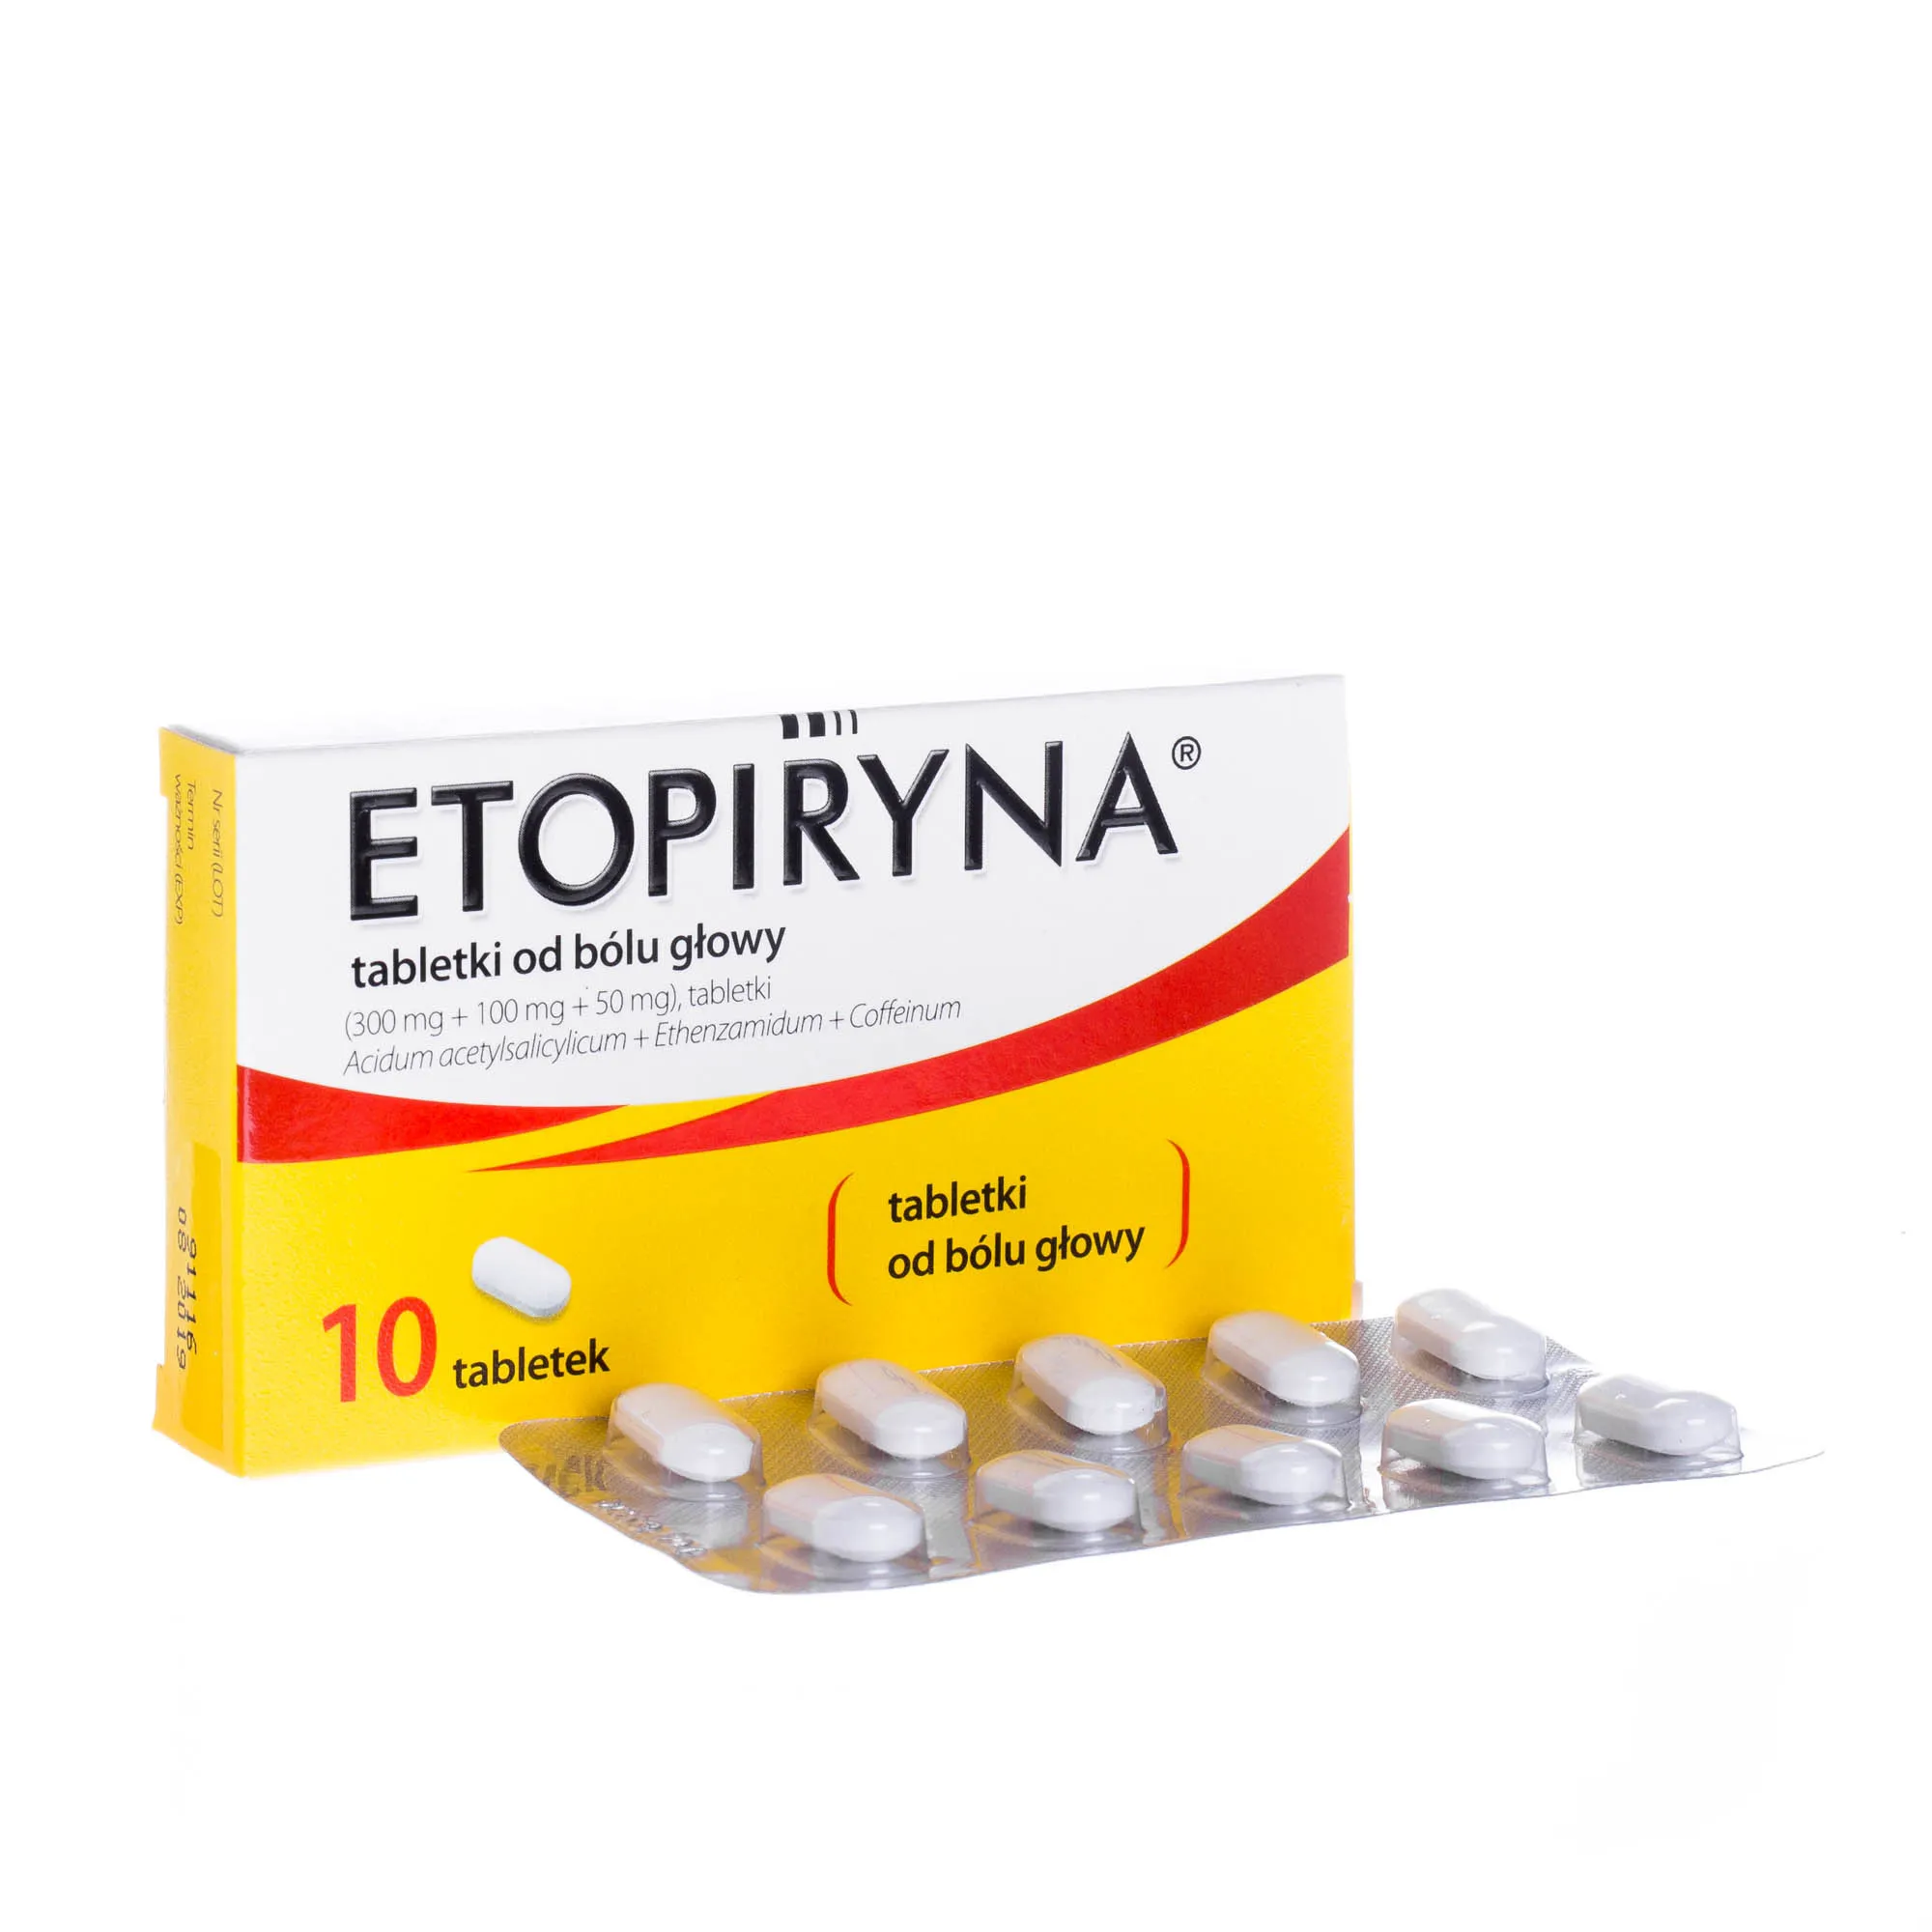 Etopiryna(300 mg+ 100 mg+ 50 mg) - 10 tabletek na ból głowy 